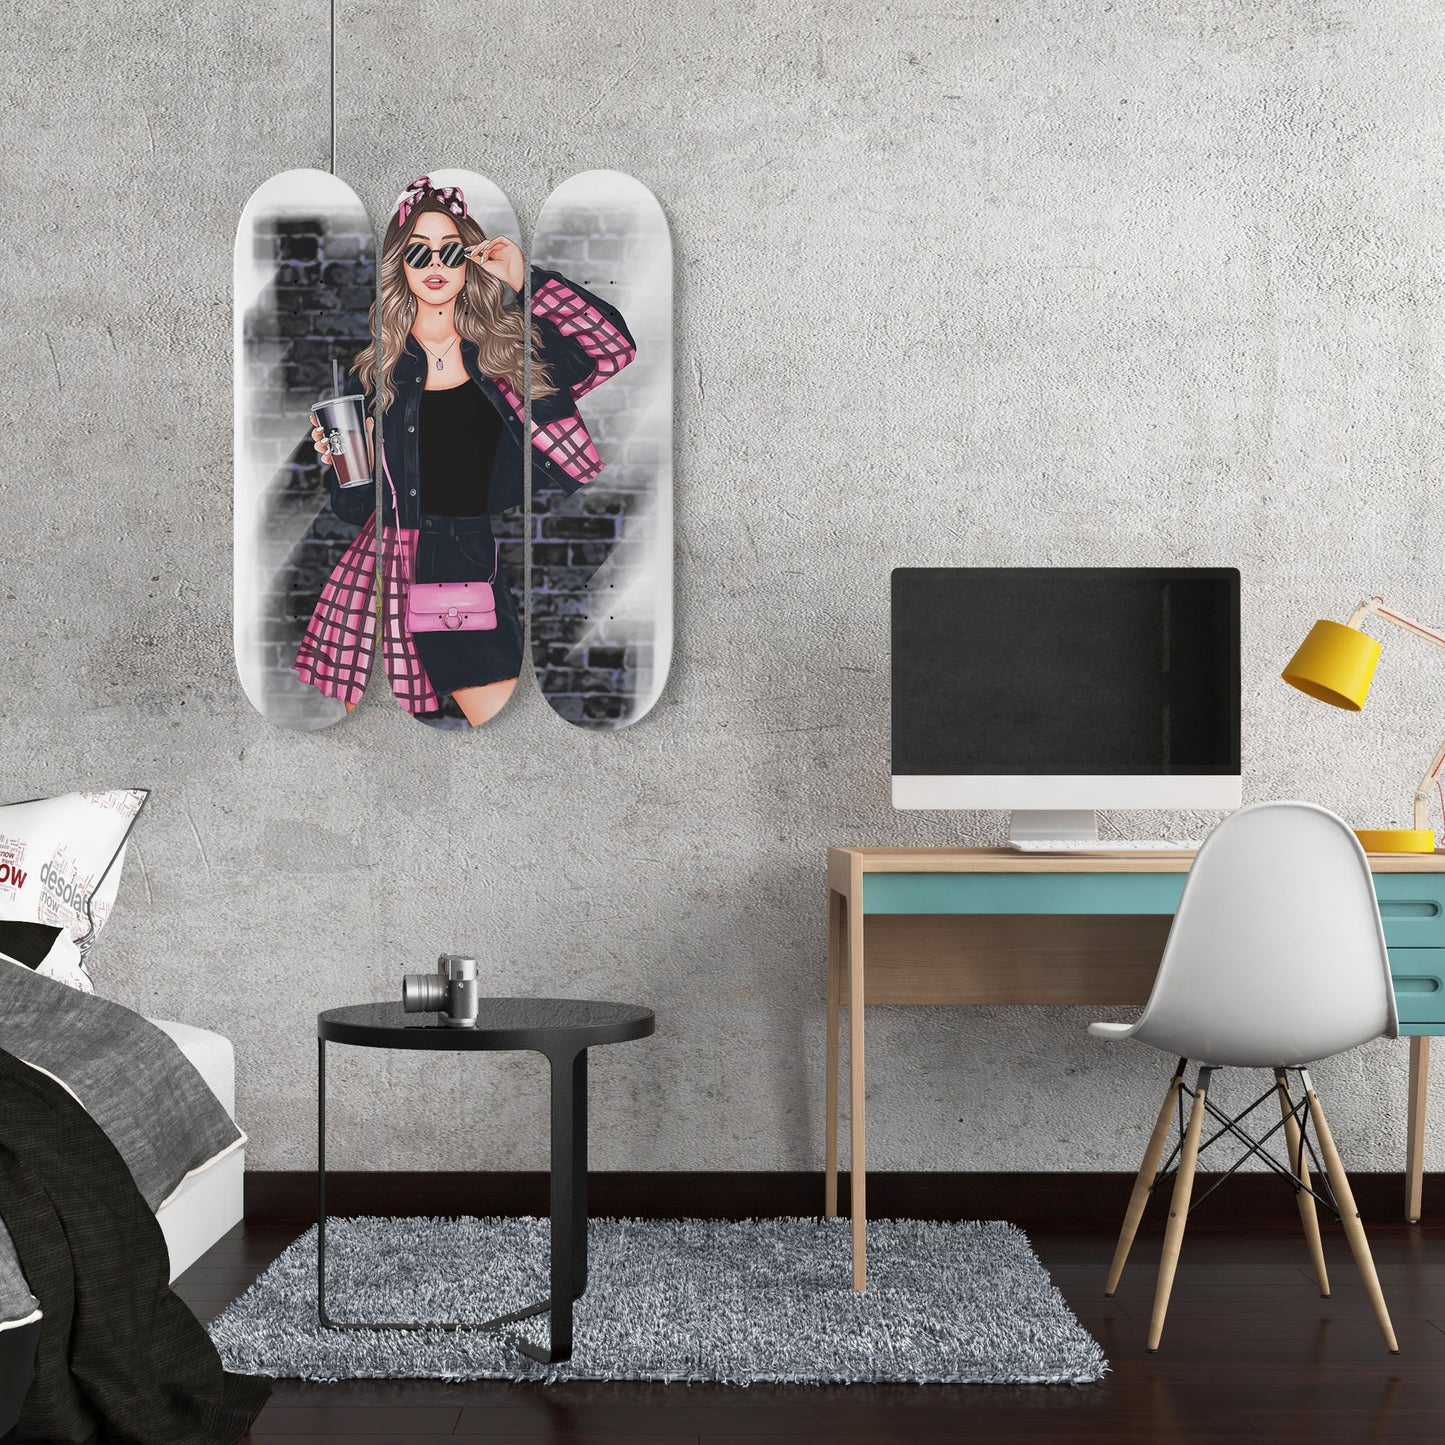 Fashion 2 | 3 Set of Skateboard Deck Wall Art | Wall Hanging Room Decor | Maple Wood | Birthday Gift